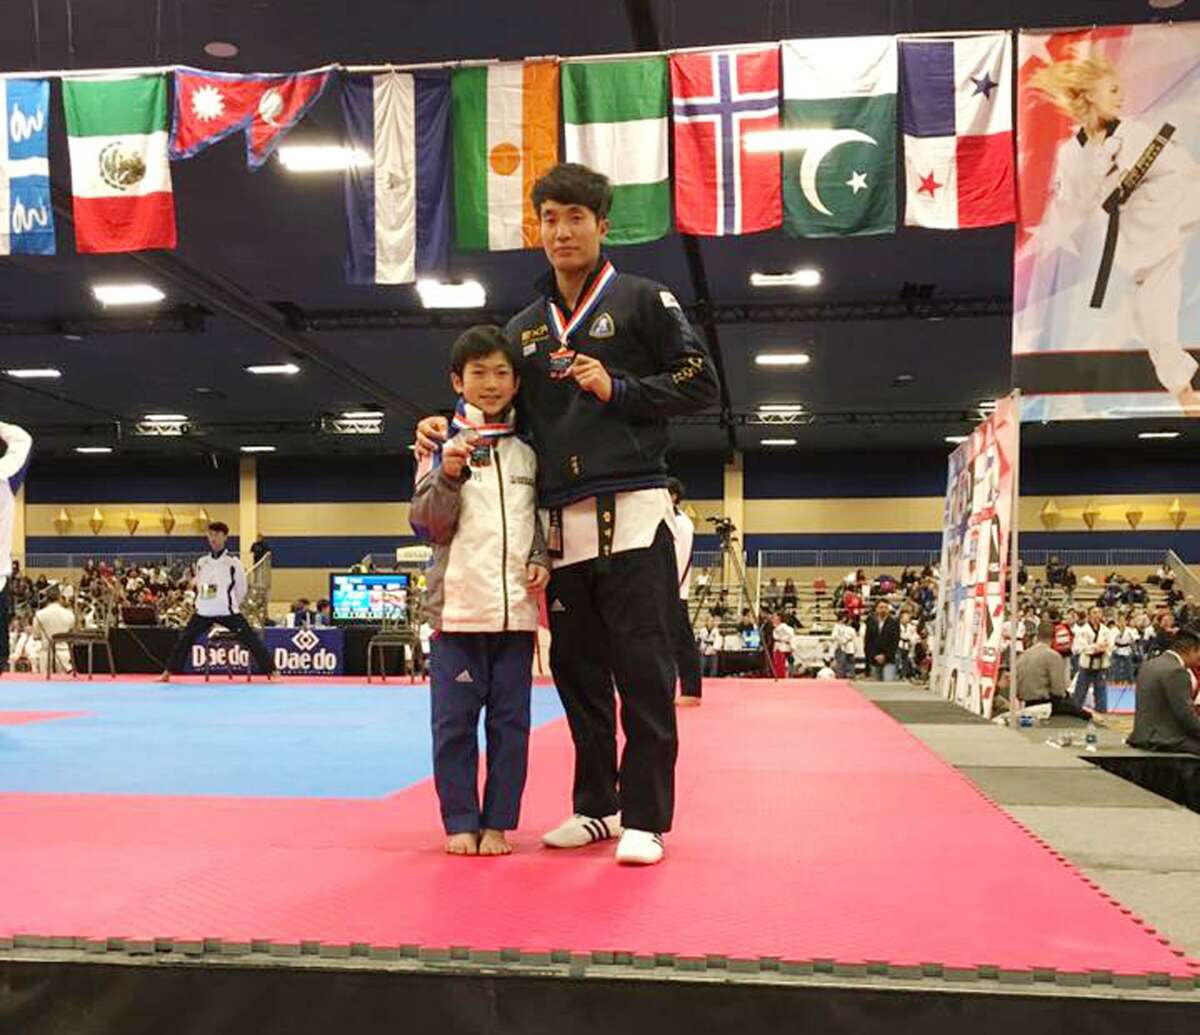 Sean Choi, a student of Master Kwangjin Ha at World Championship Taekwondo in Fairfield, took home a silver award from the 26th U.S. Open Taekwondo Championships held in Las Vegas, Nev.